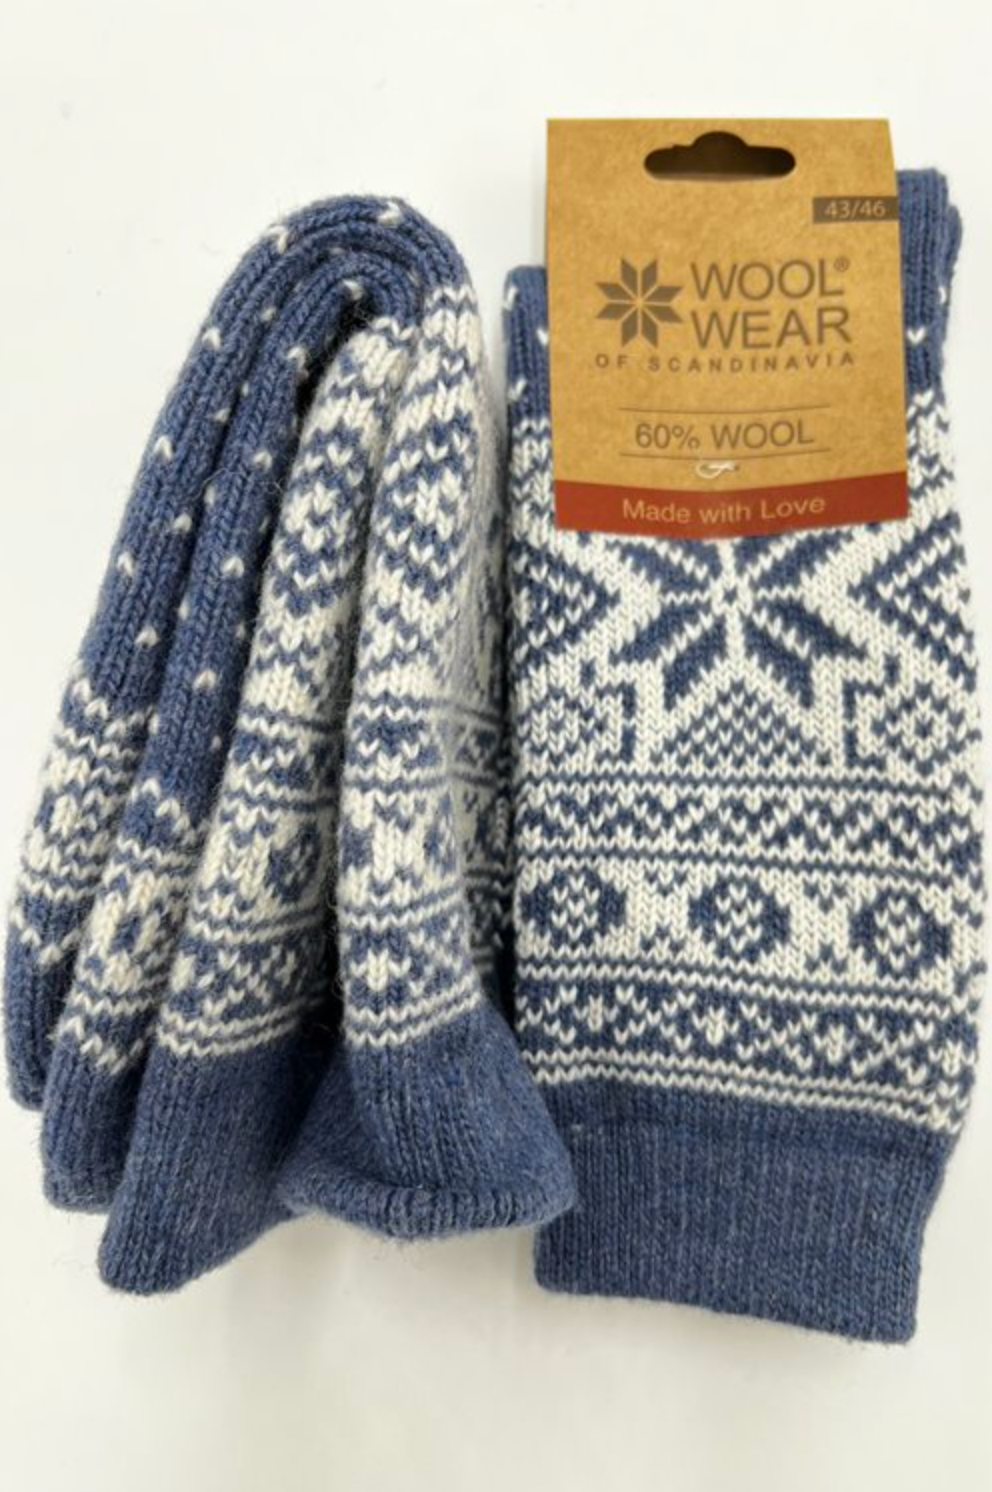 Wool socks with snowflake pattern - denim/blue/white.